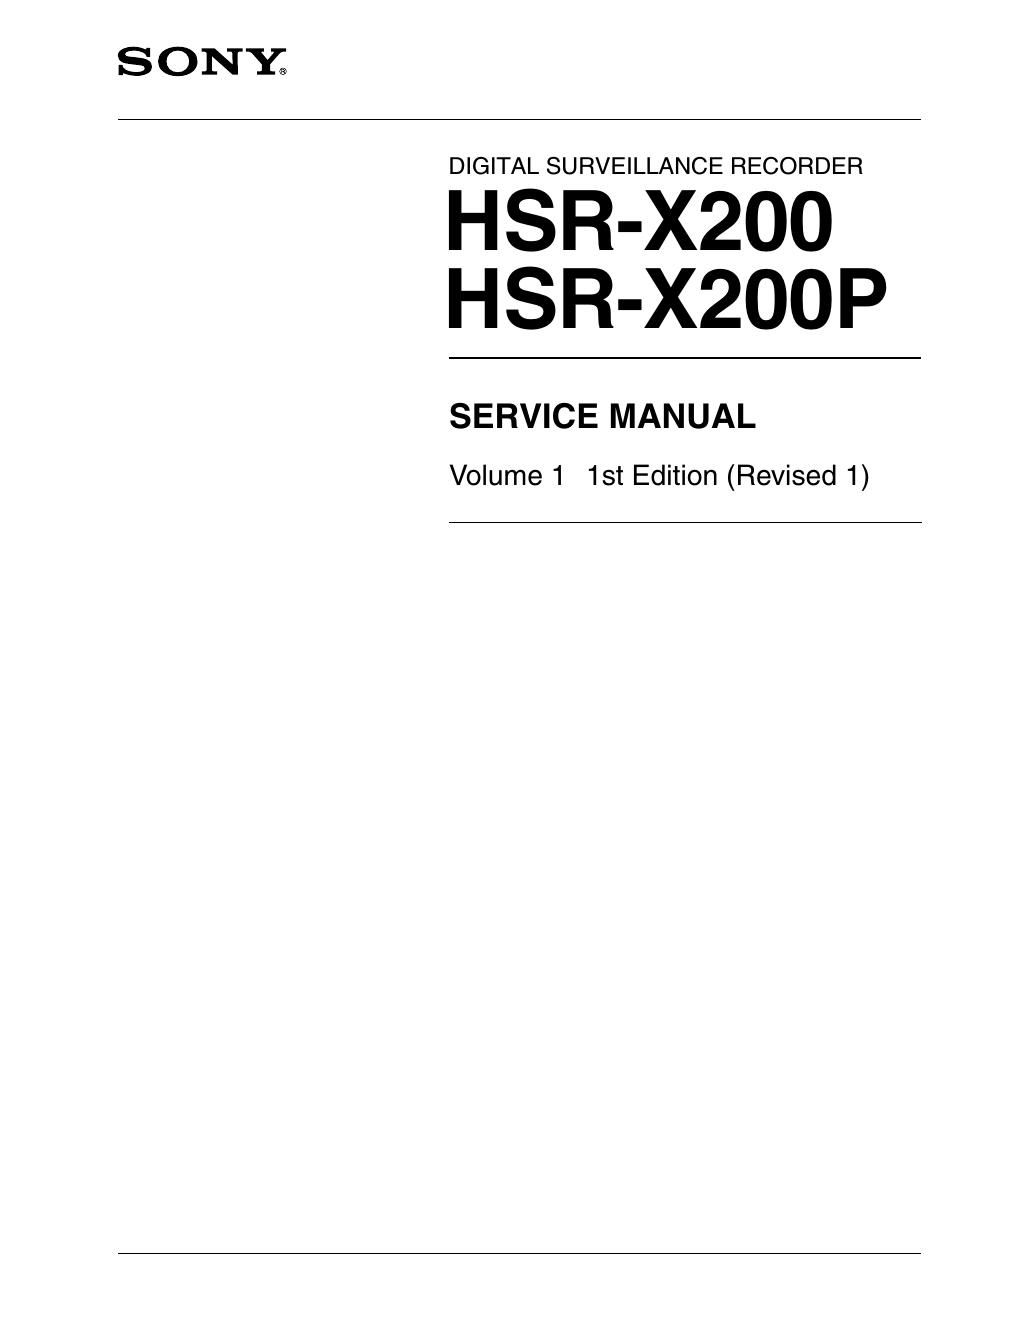 sony hsr x 200 p service manual